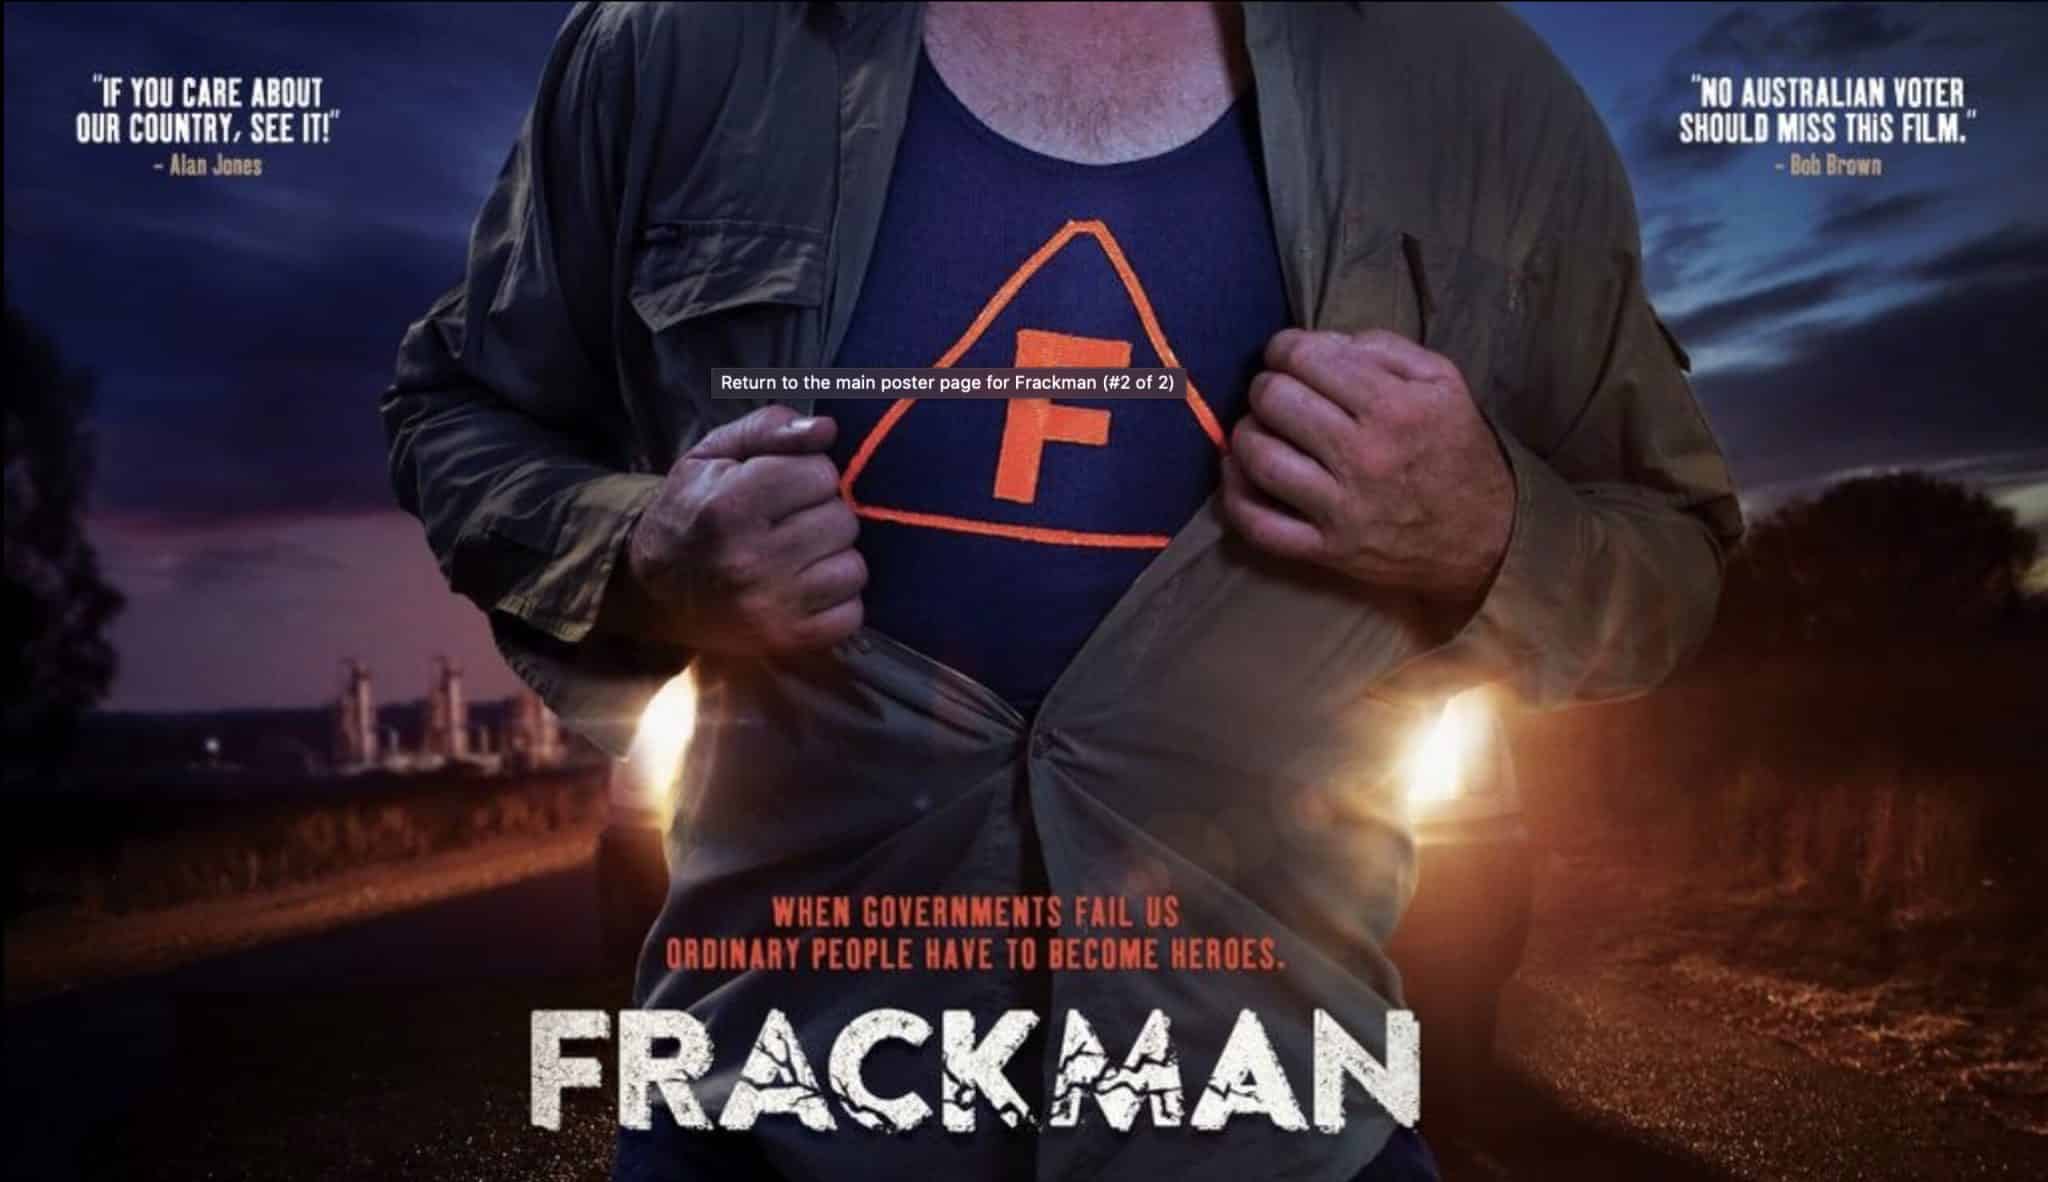 Frackman